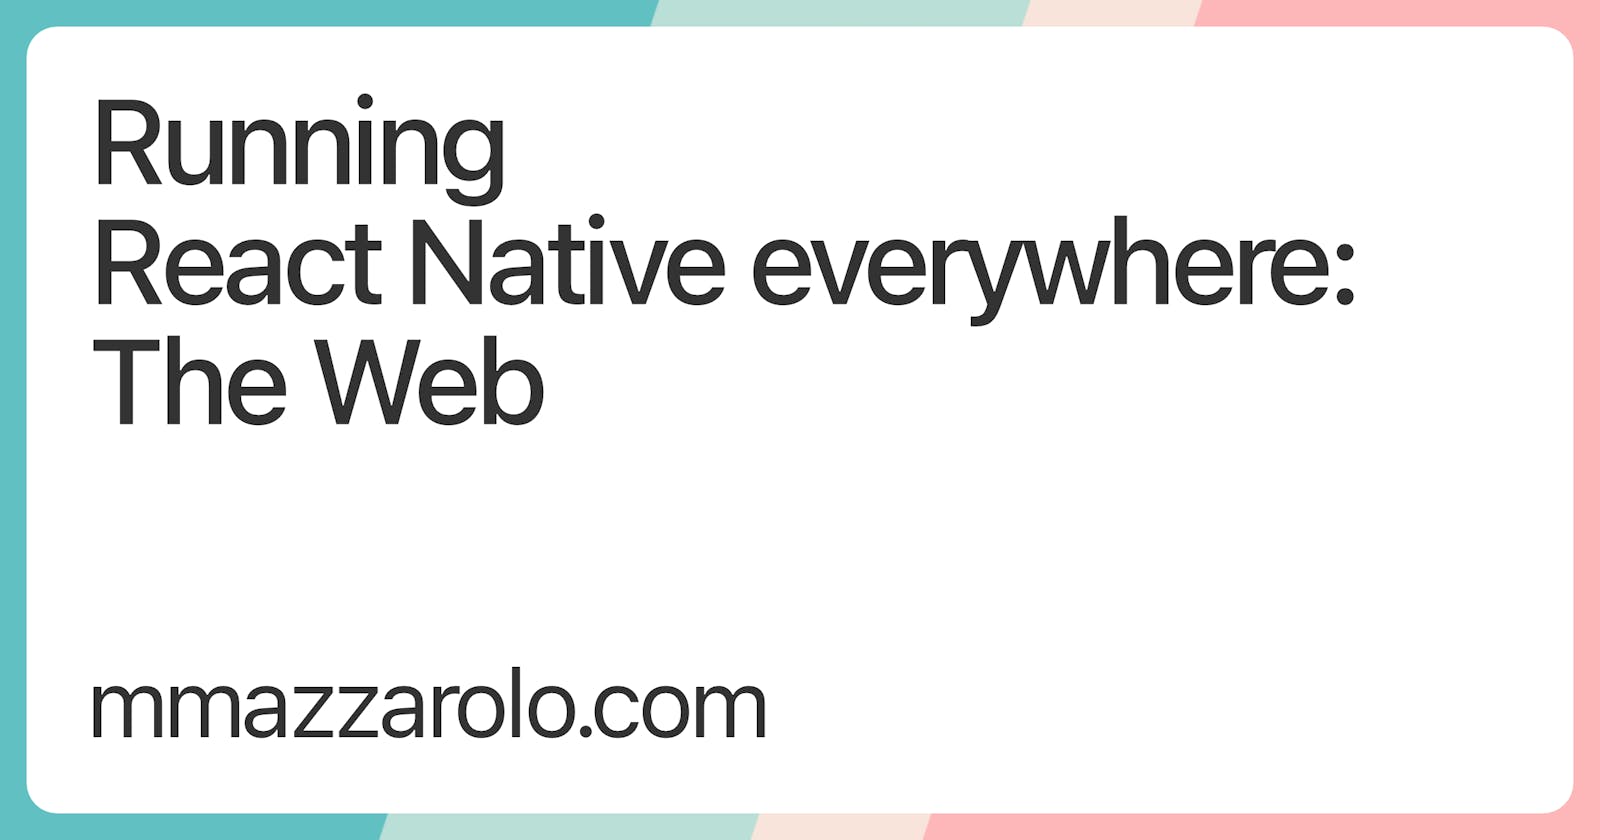 Running React Native everywhere: The Web